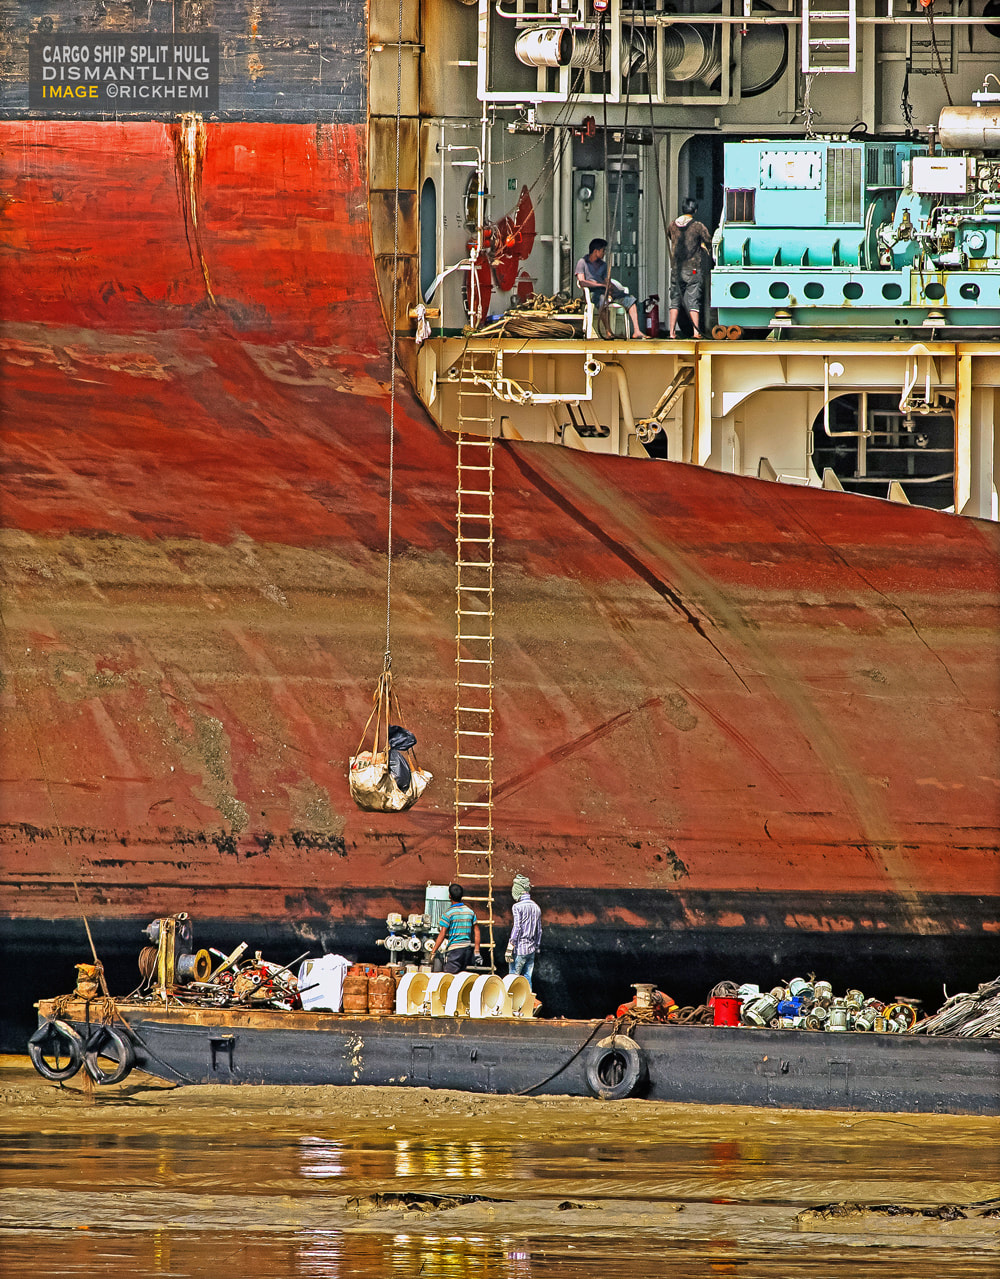 solo overland travel Asia, cargo ship dismantling, cargo ship split hull image by Rick Hemi